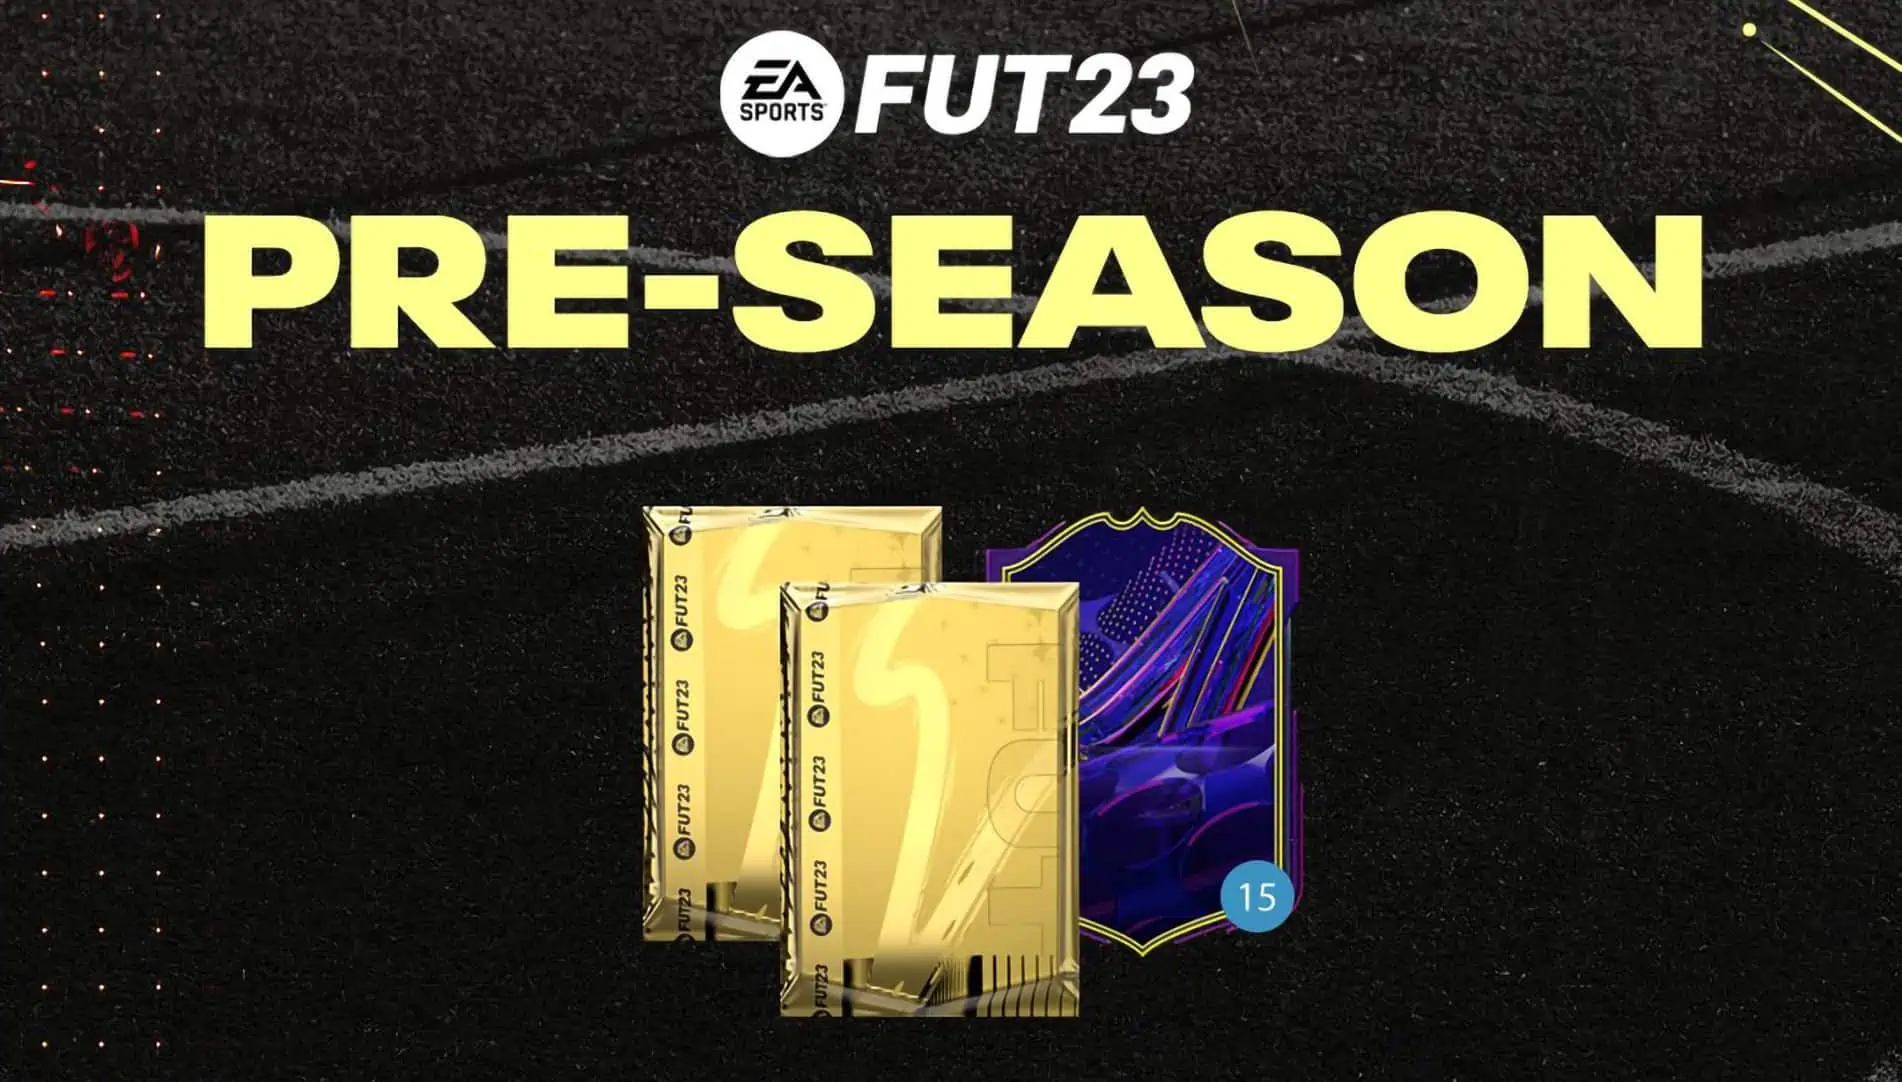 FIFA 23: How to Claim Pre-Season Rewards?